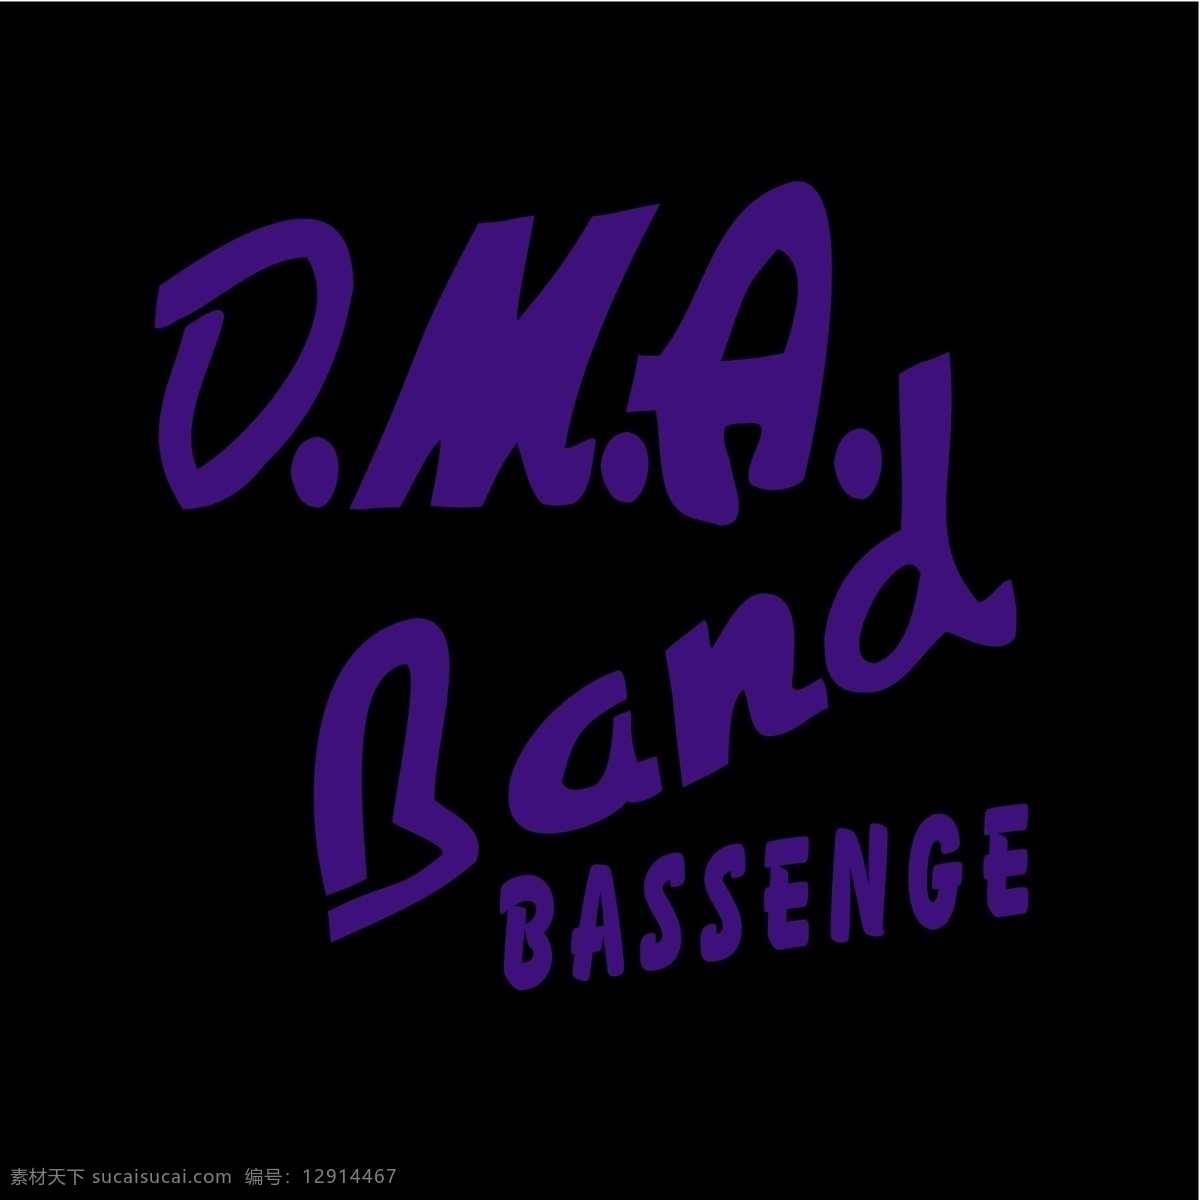 dma 乐队 巴森 dma的乐队 免费 矢量 图形 艺术 载体 带设计 免费带矢量 自由频段向量 带 自由 带图形 图像 黑色